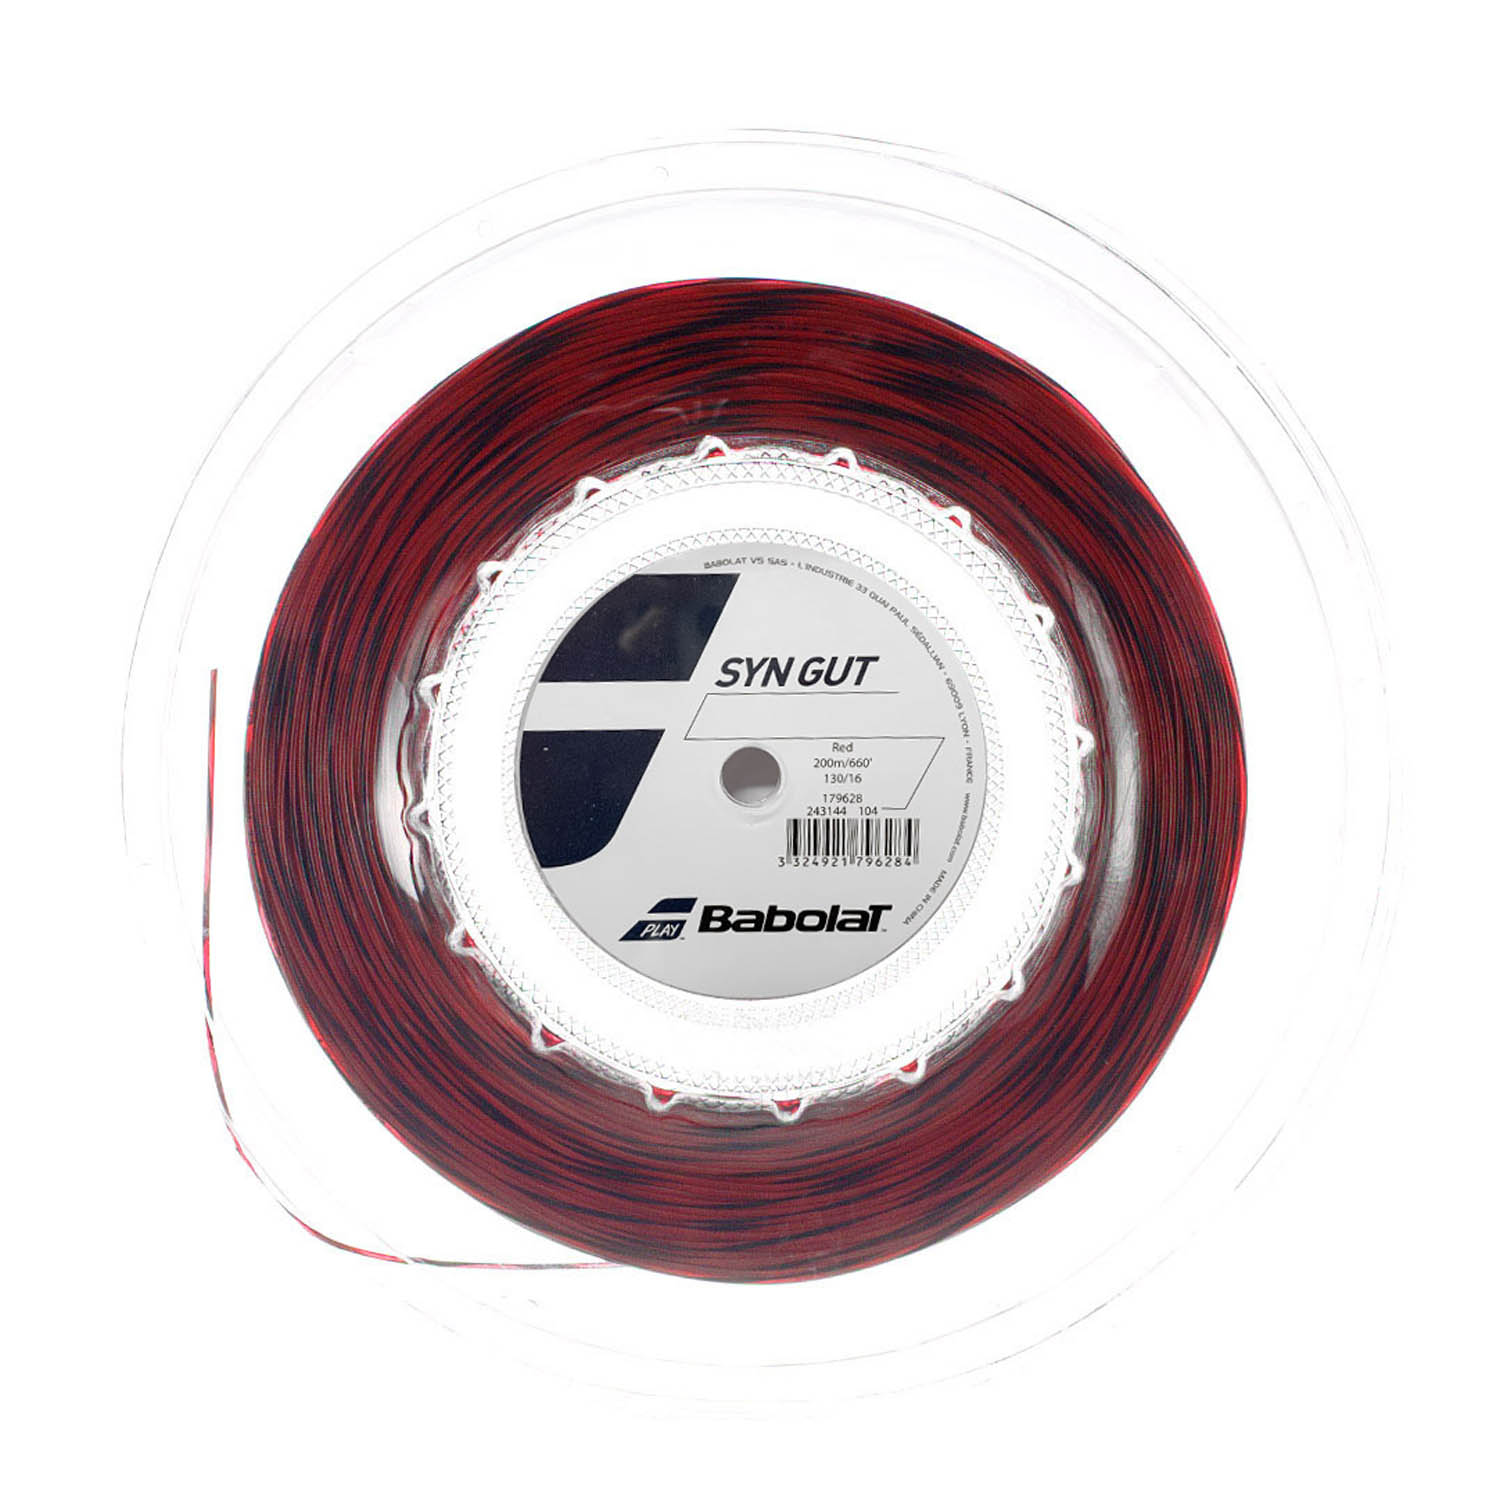 Babolat Syn Gut 1.30 String Reel 200 m - Red